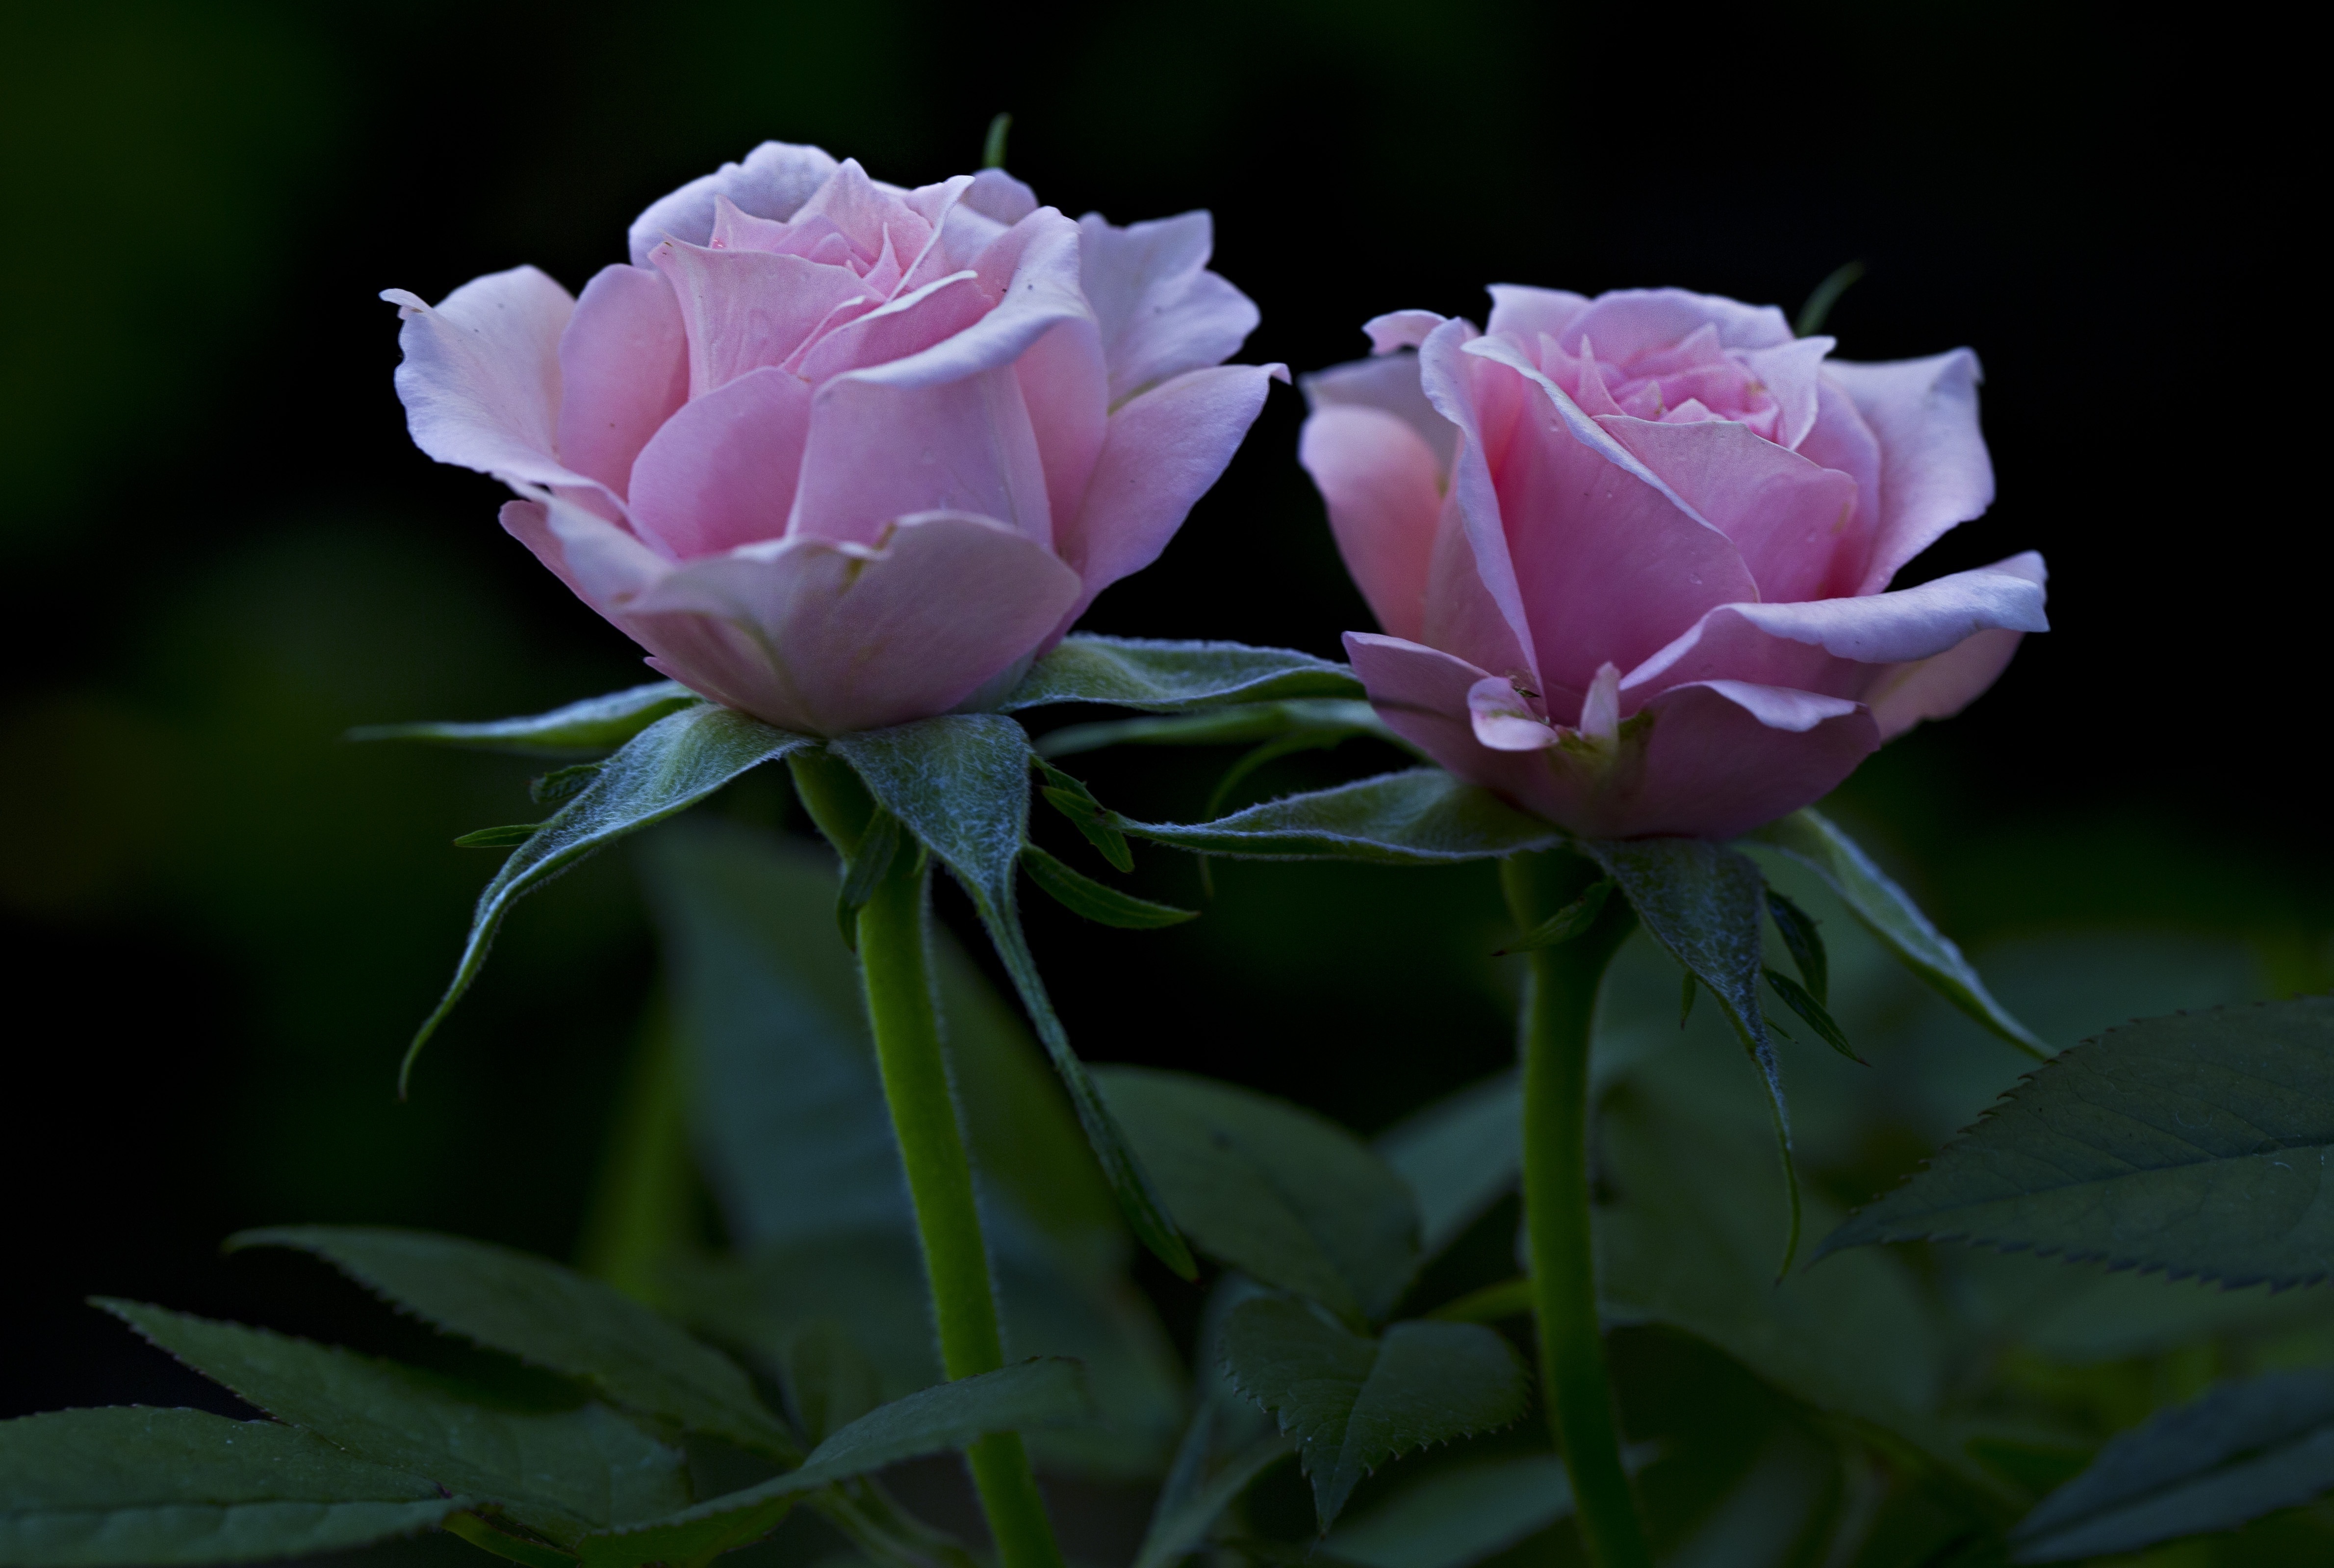 Two beautiful flowers photo